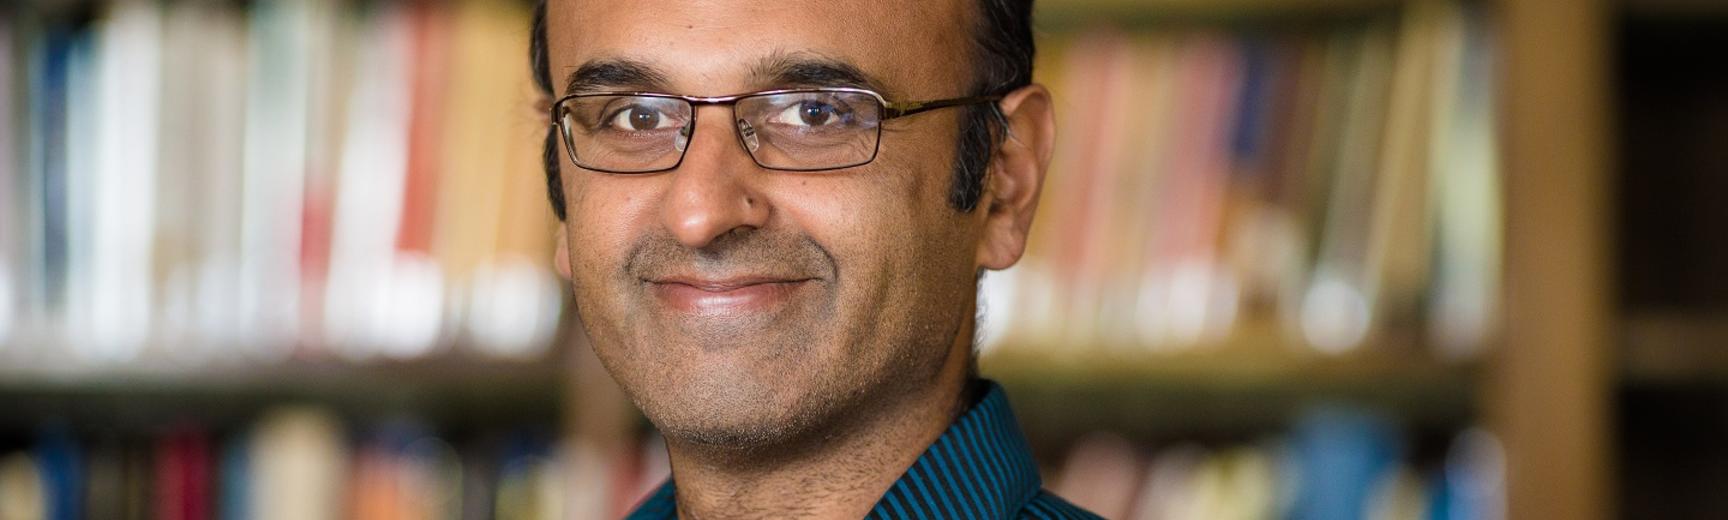 Portrait photo of Professor Yadvinder Malhi, smiling against a blurred background of shelves full of books